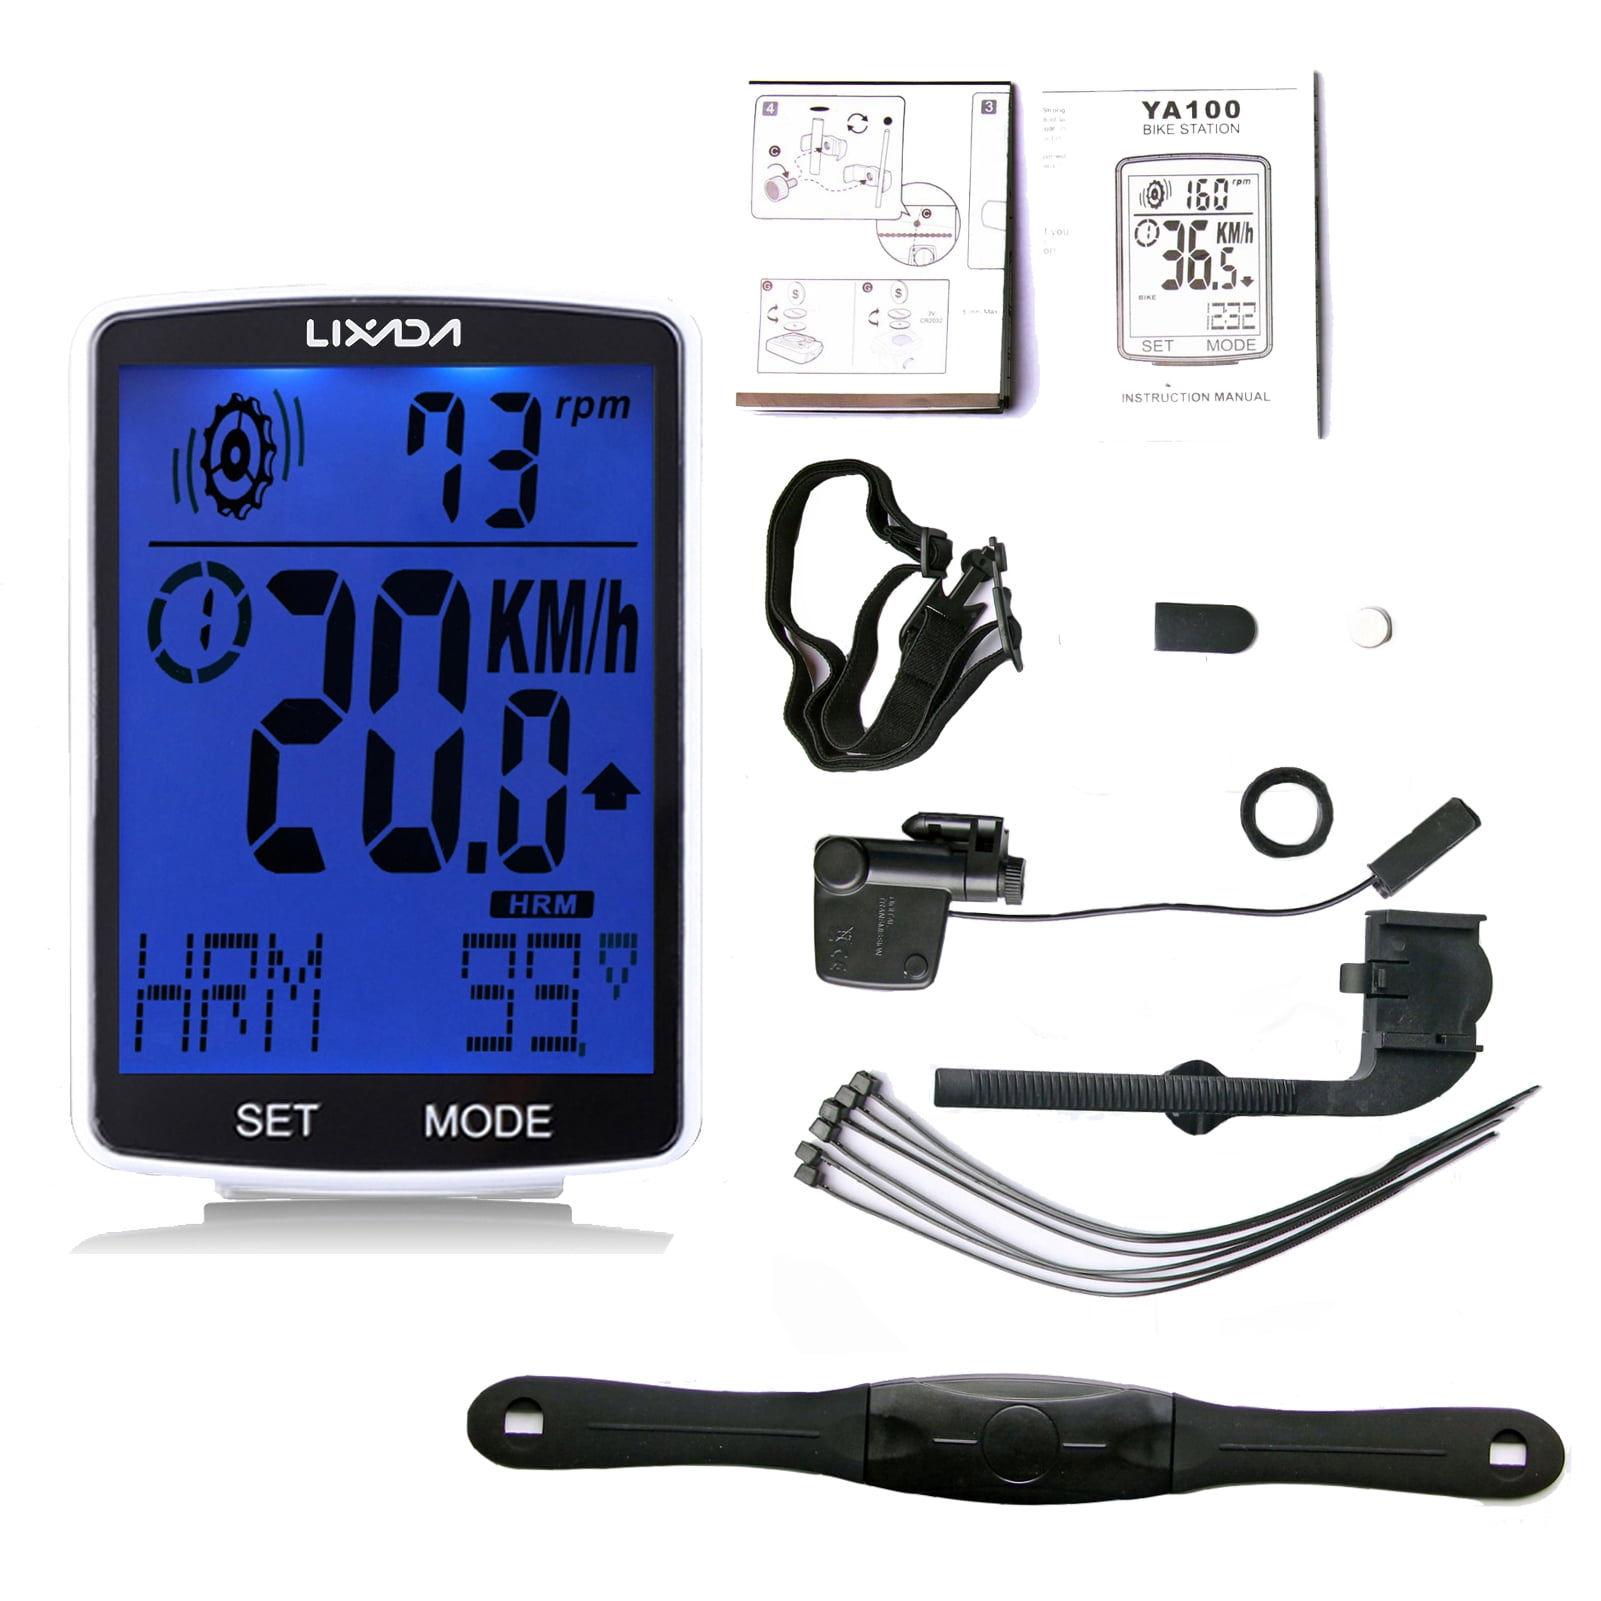 Tianhaik Bicycle Speedometer and Odometer Wireless Waterproof Cycle Bike Computer with LCD Display & Multi-Functions 